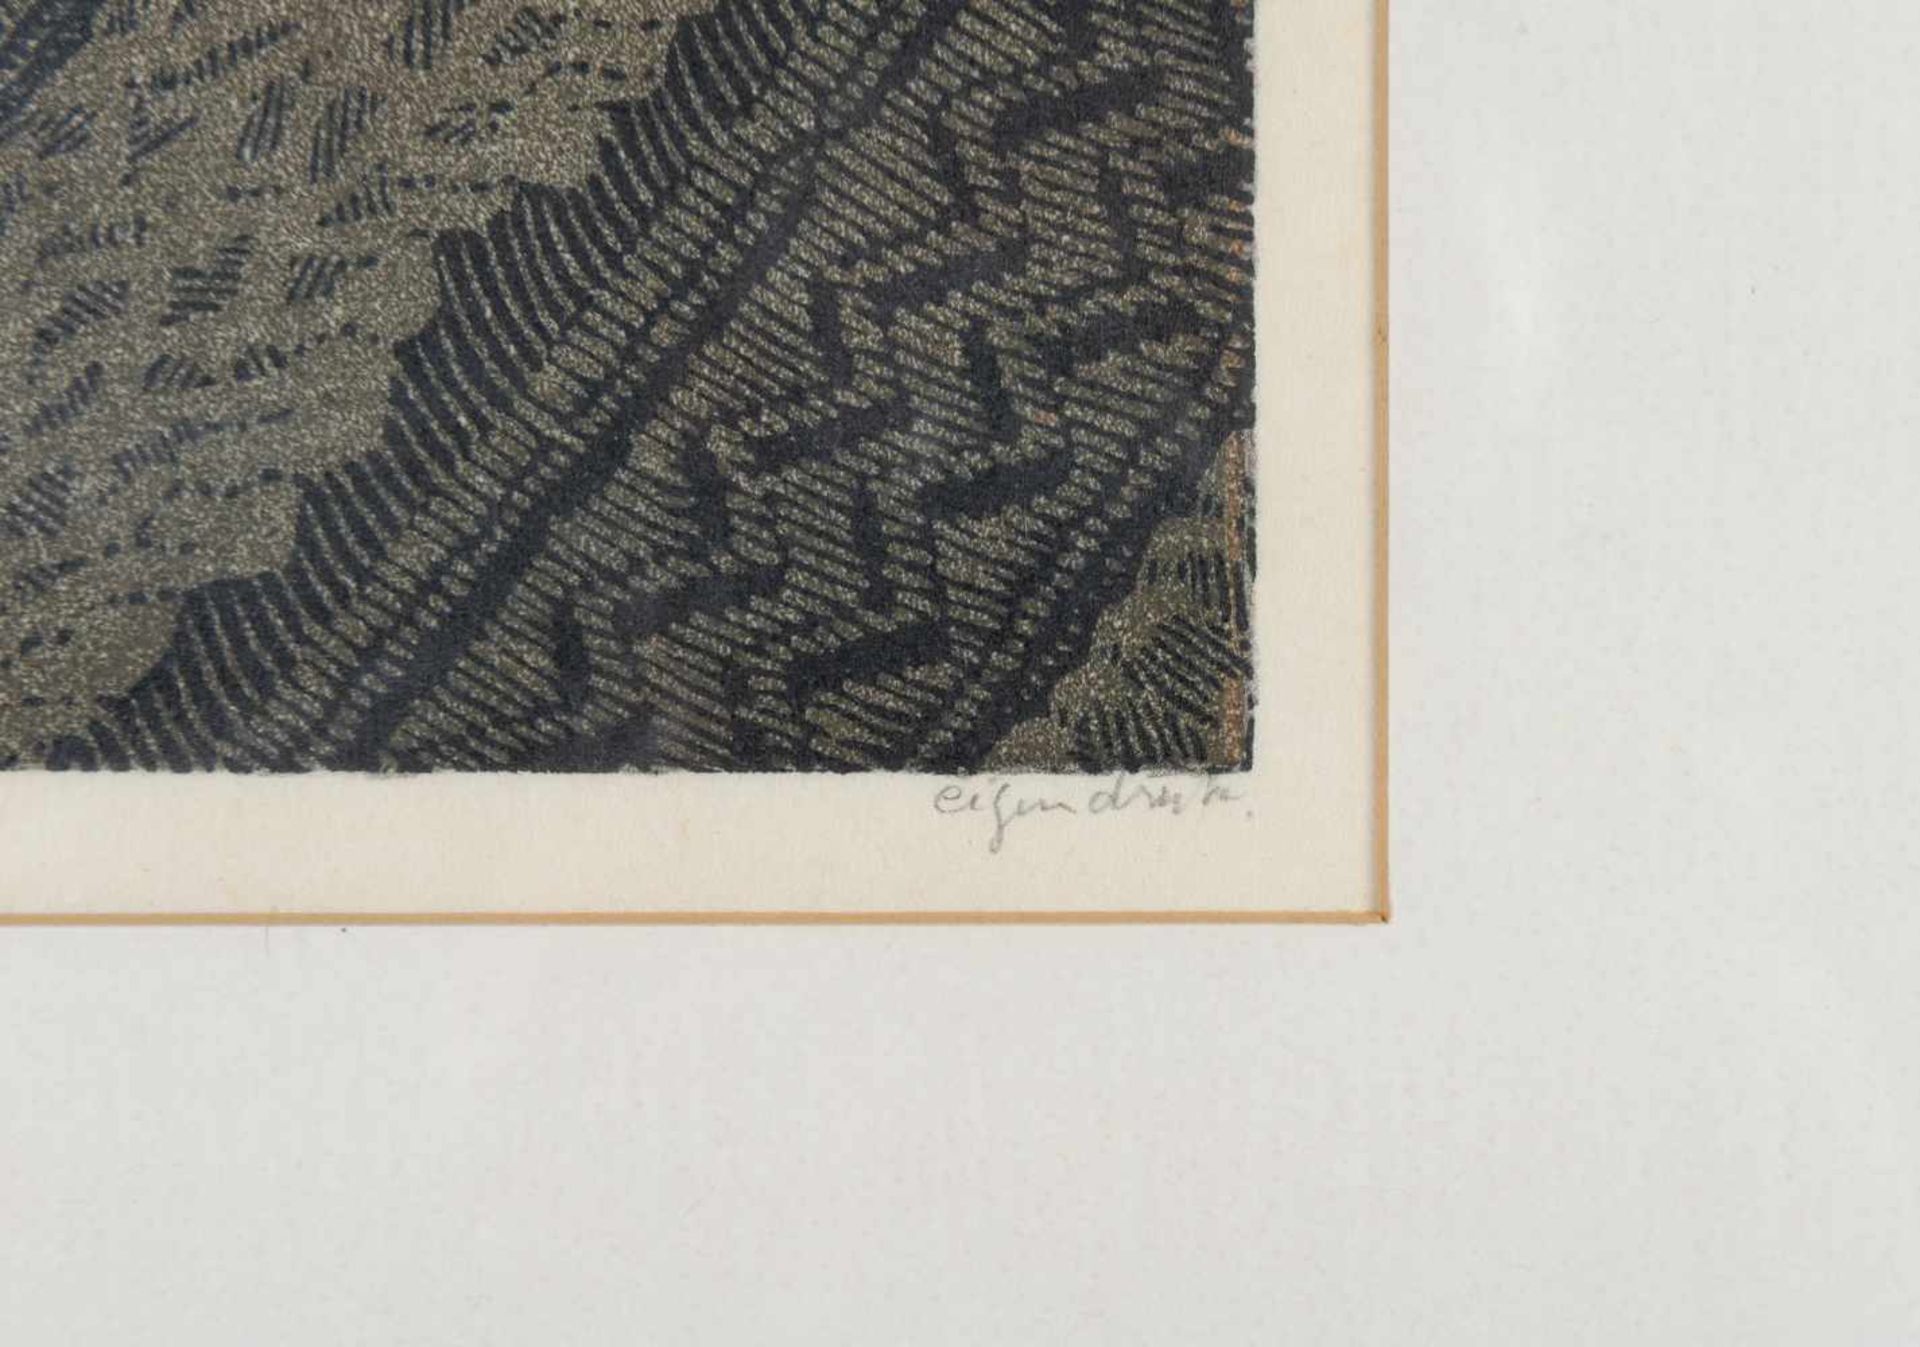 Maurits Cornelis Escher (1898-1972) 'Modderplas', gesigneerd l.o., 'eigen druk' r.o., februari 1952, - Image 4 of 8